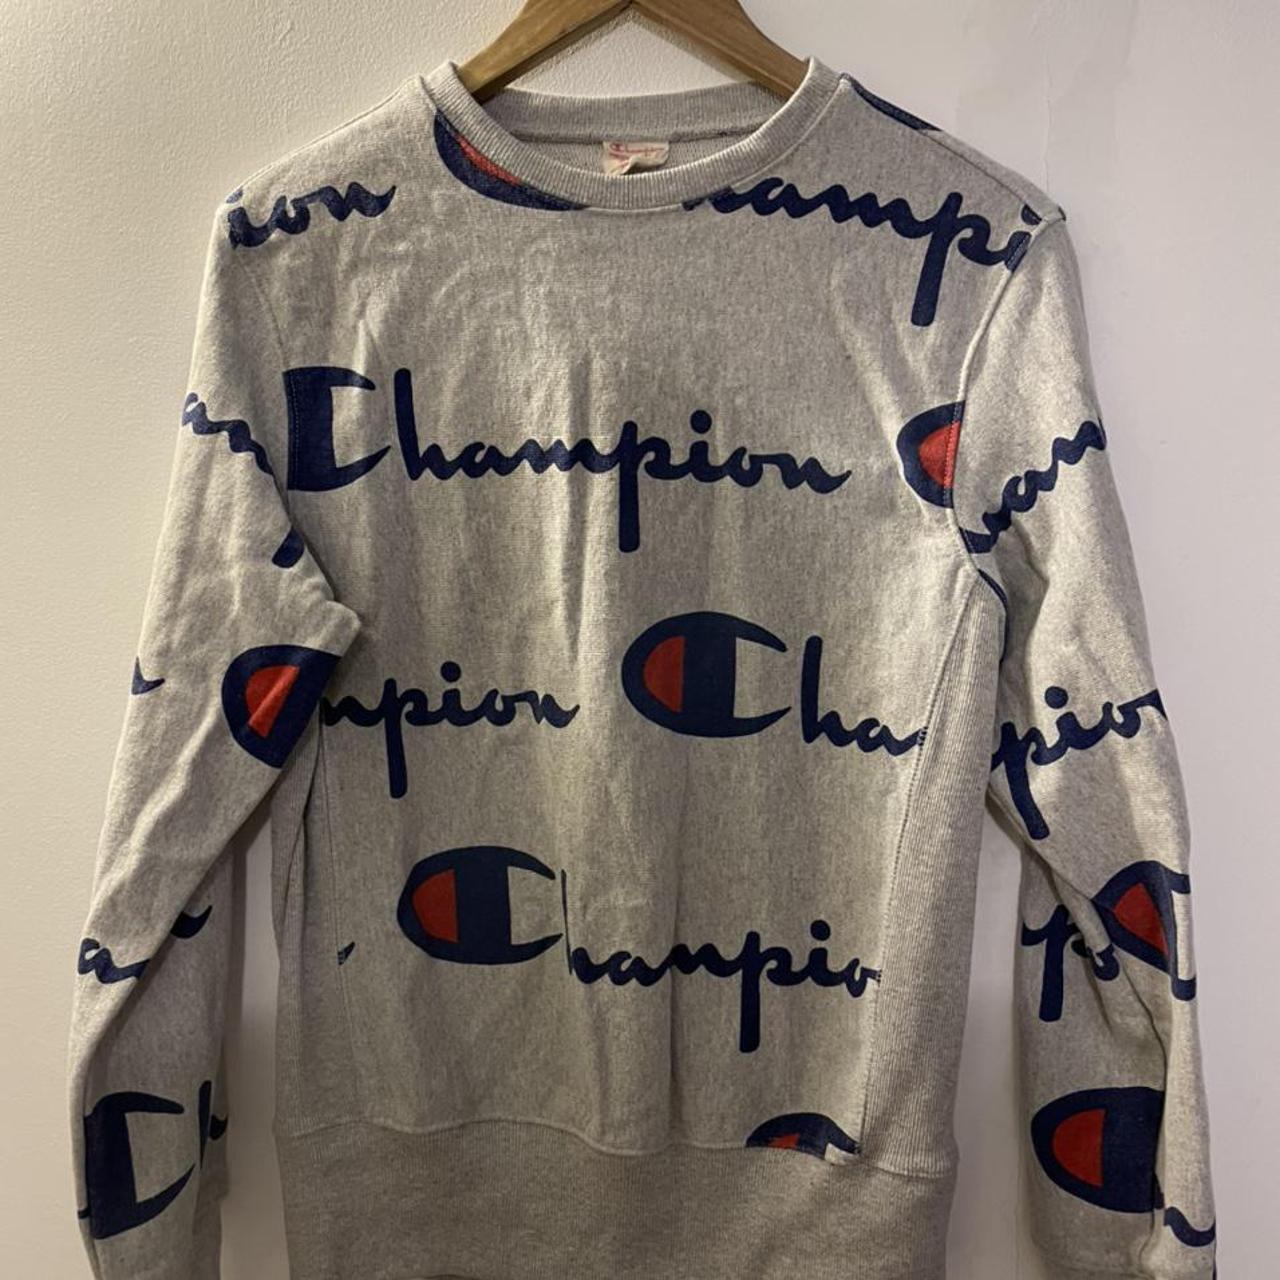 Champion Men's Grey Jumper | Depop